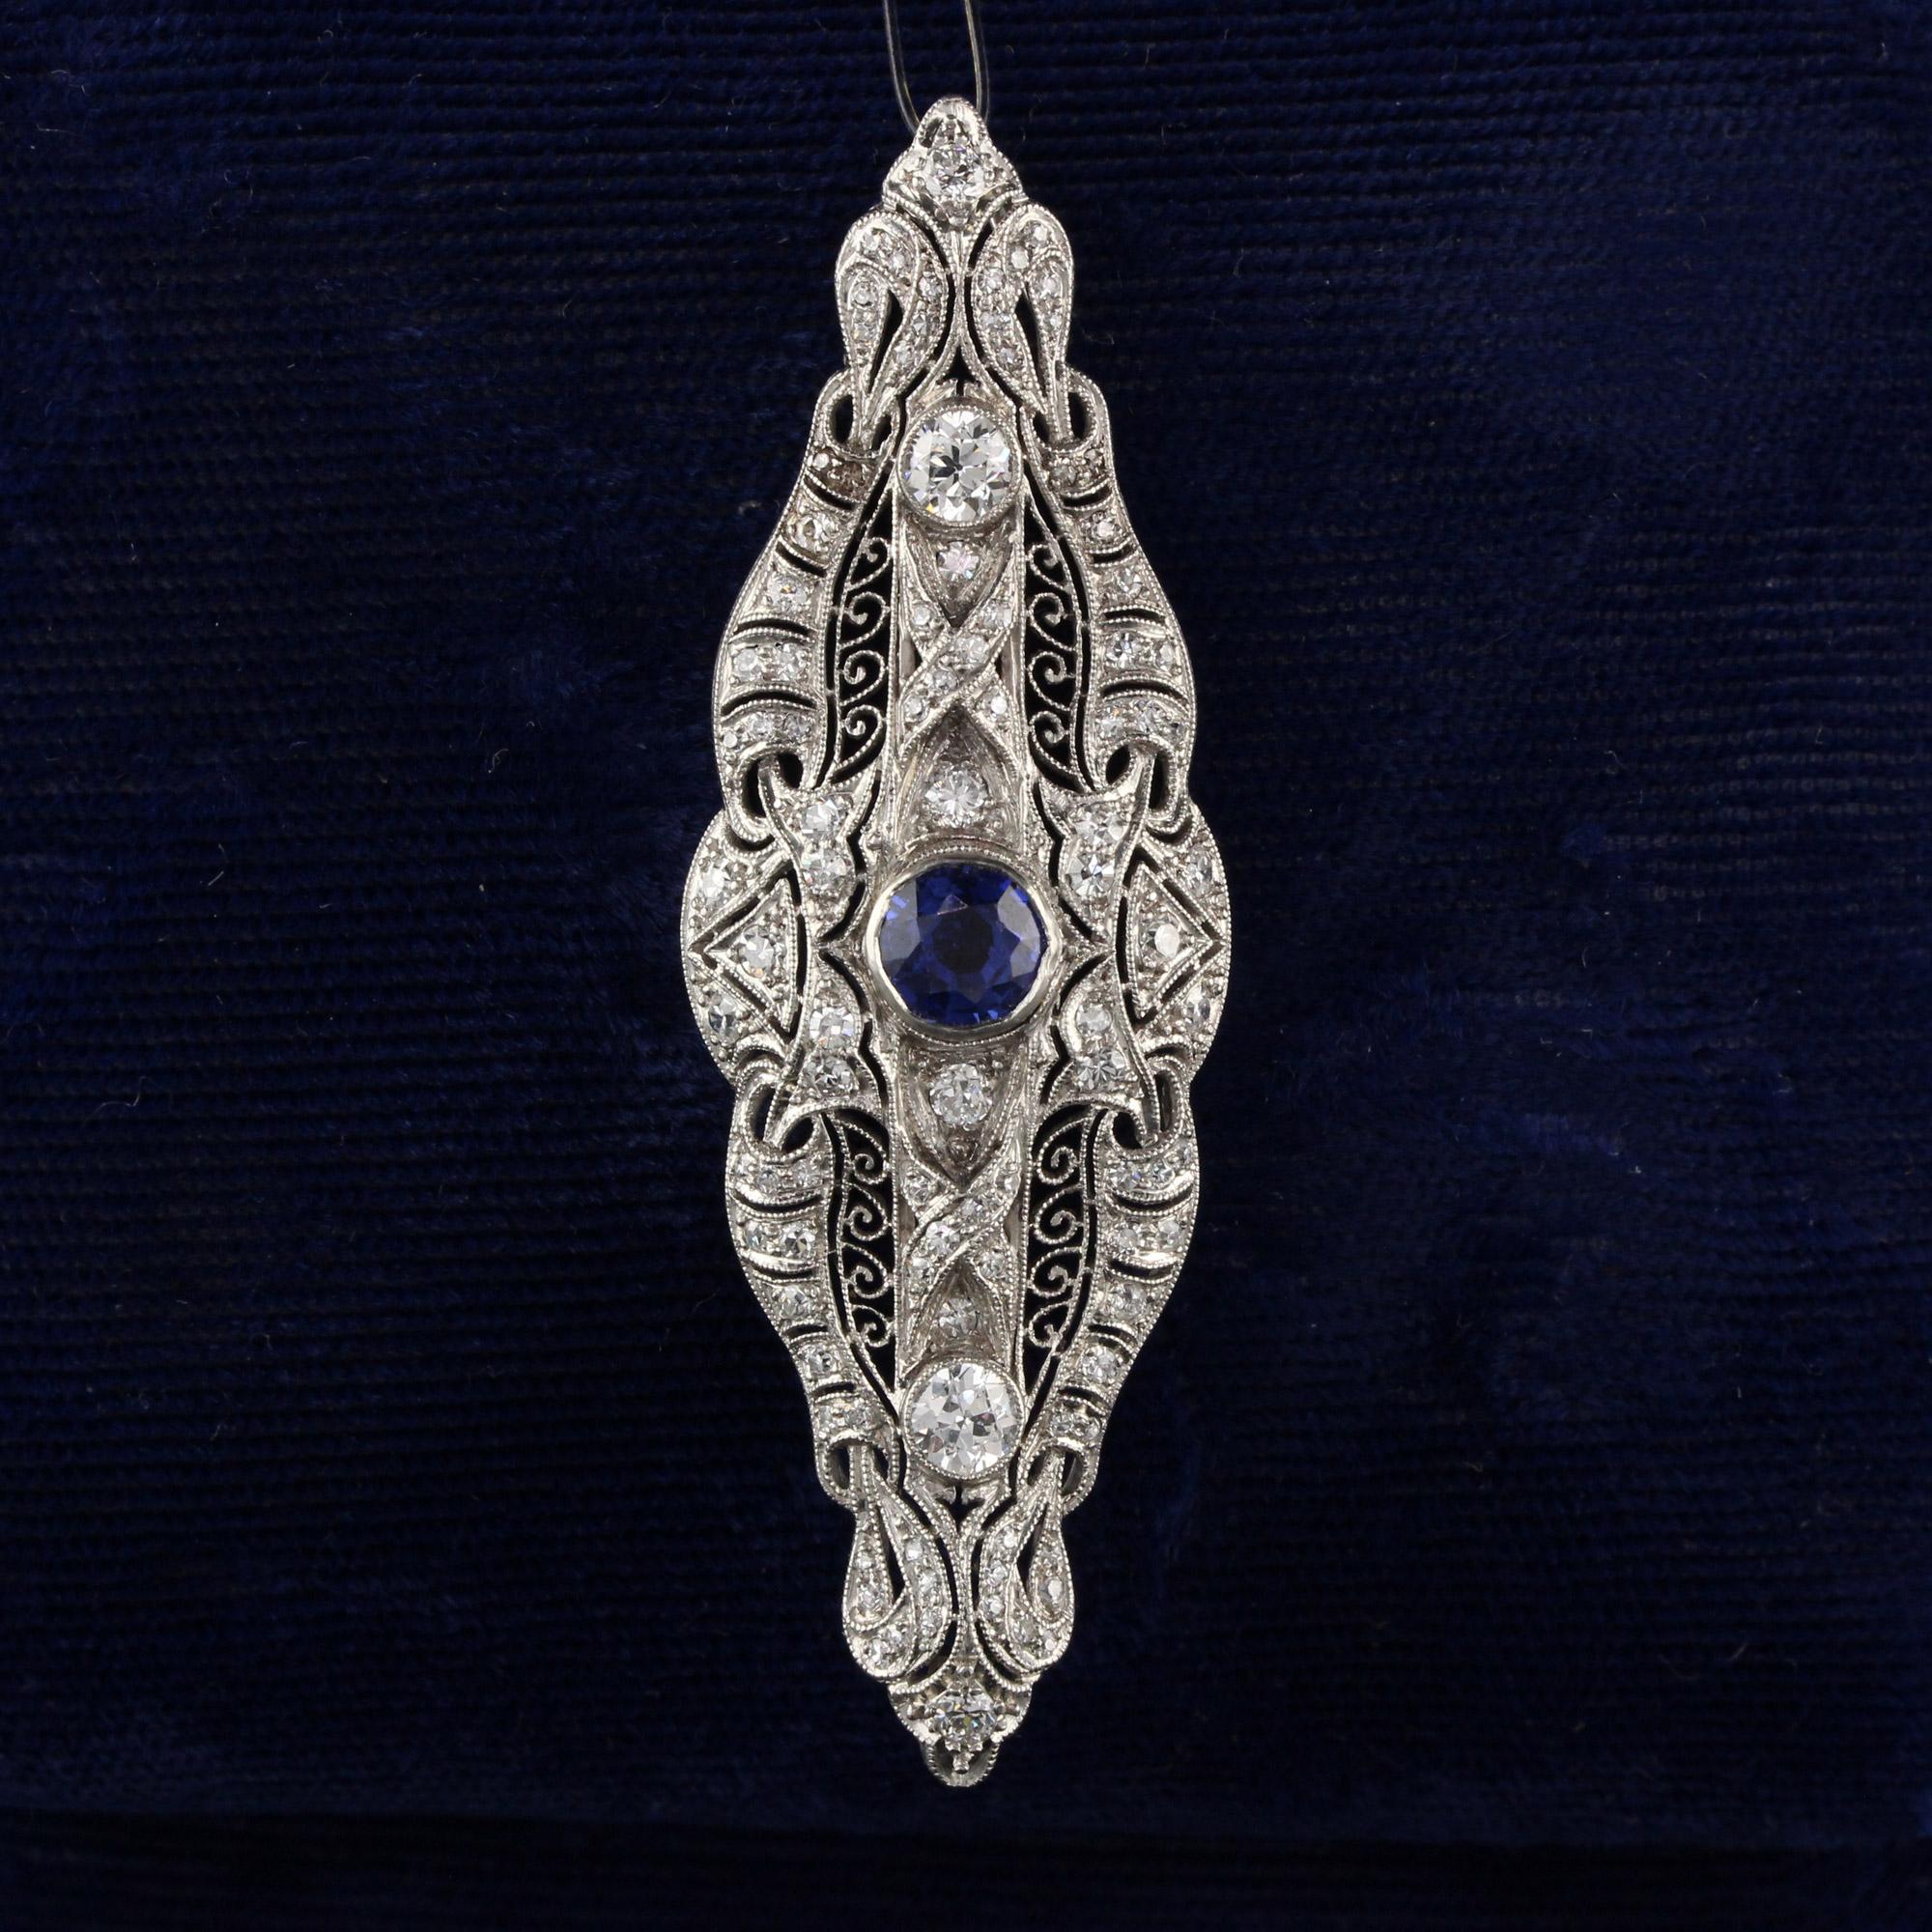 Gorgeous antique platinum pendant. The pendant has a sapphire center stone. 

Item #N0032

Metal: Platinum

Weight: 11.6 Grams

Total Diamond Weight: Approximately 1.50 cts

Diamond Color: H

Diamond Clarity: VS2

Measurements: 20.7 mm x 6.9 mm